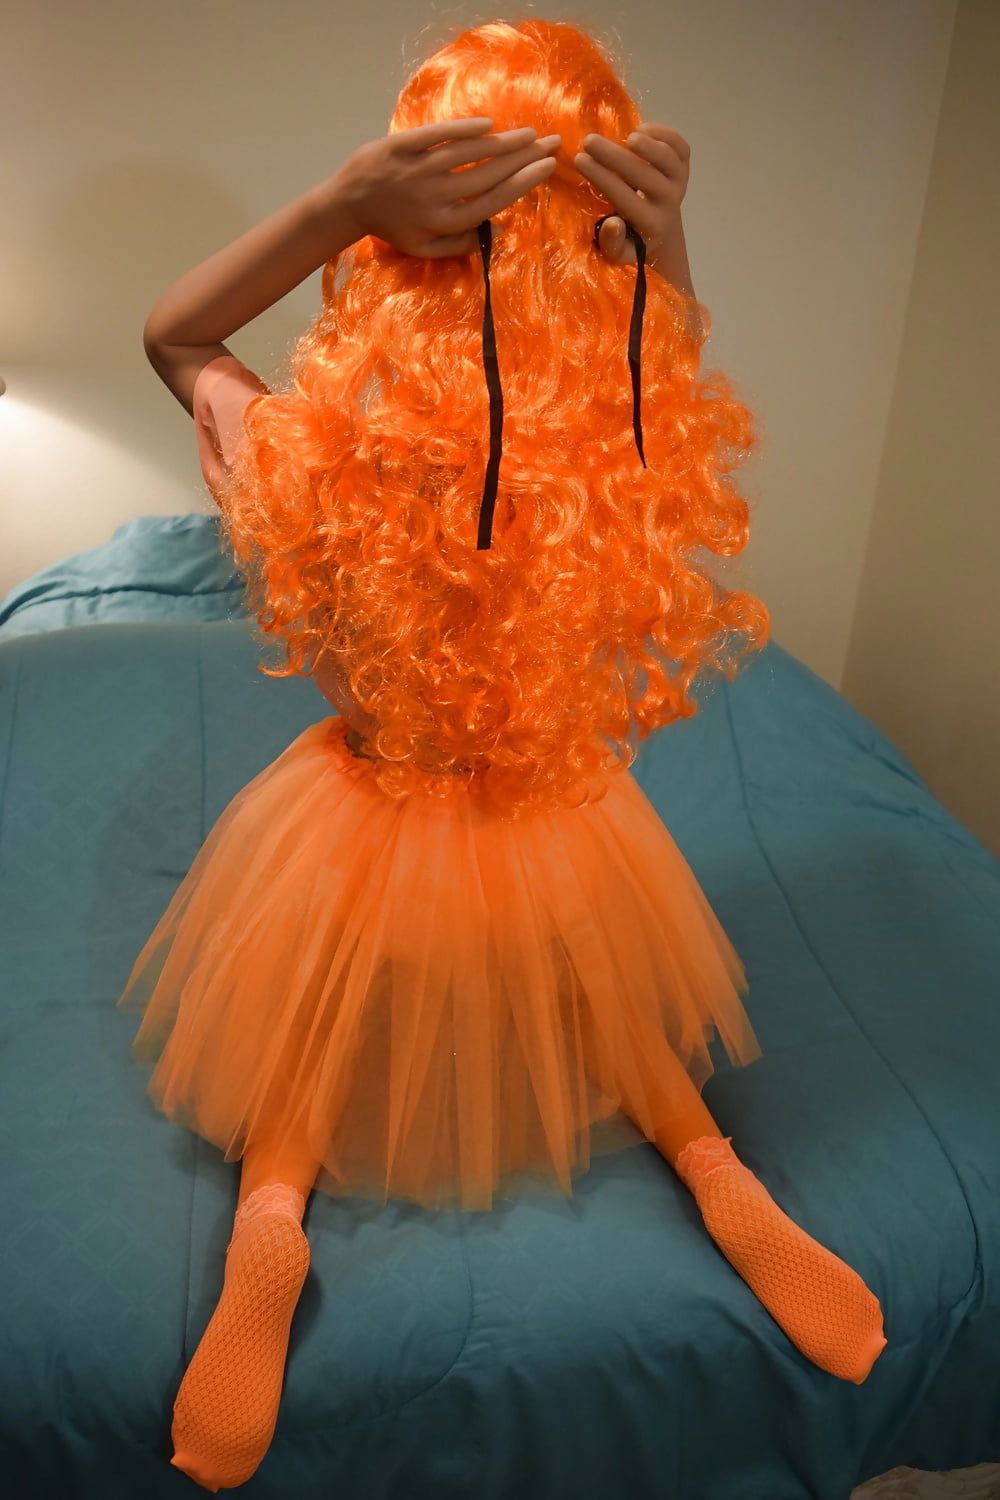 Nina's orange dream #17